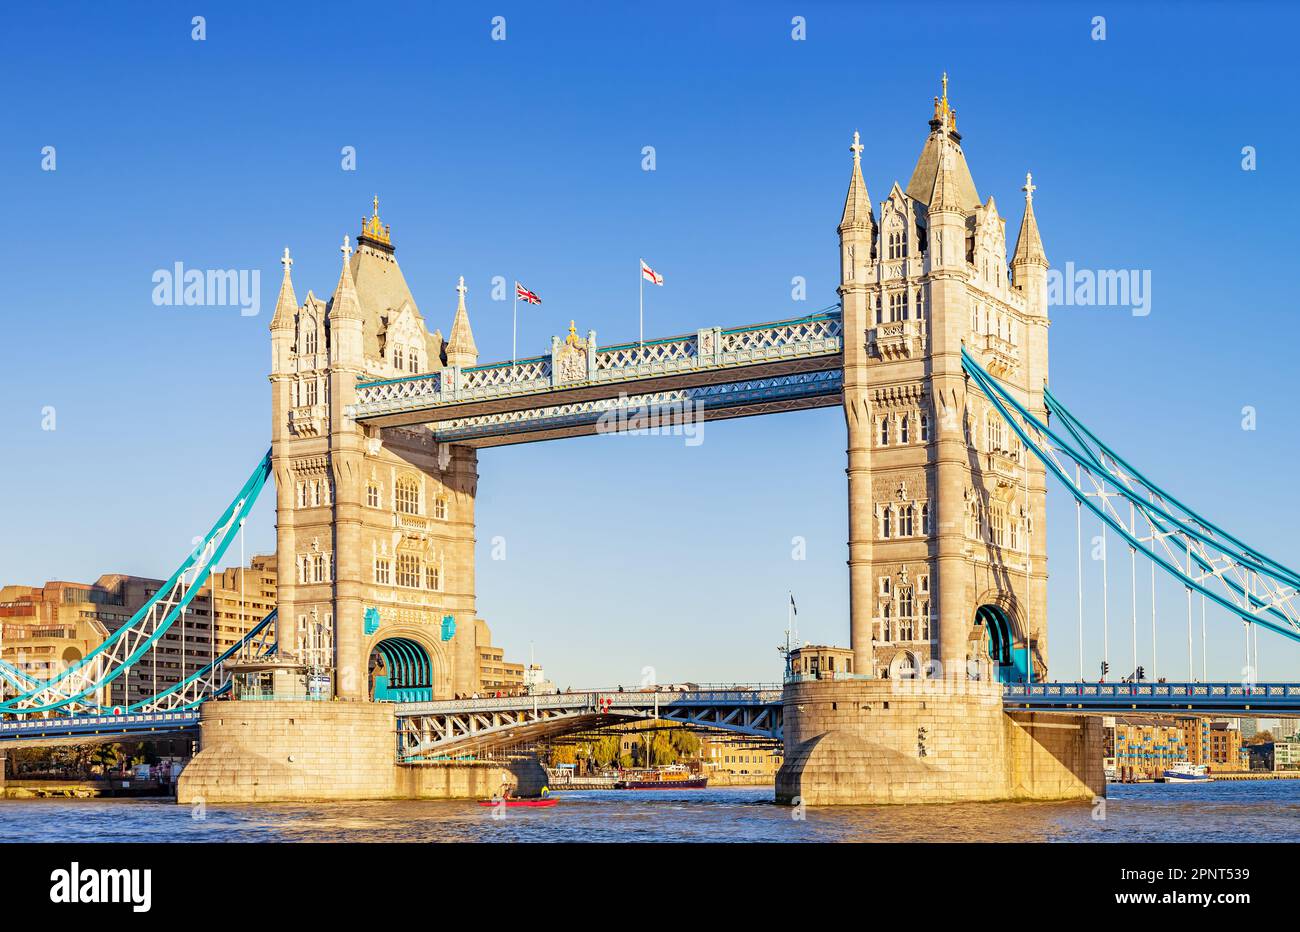 The landmark Tower Bridge in central London, England, UK. Stock Photo